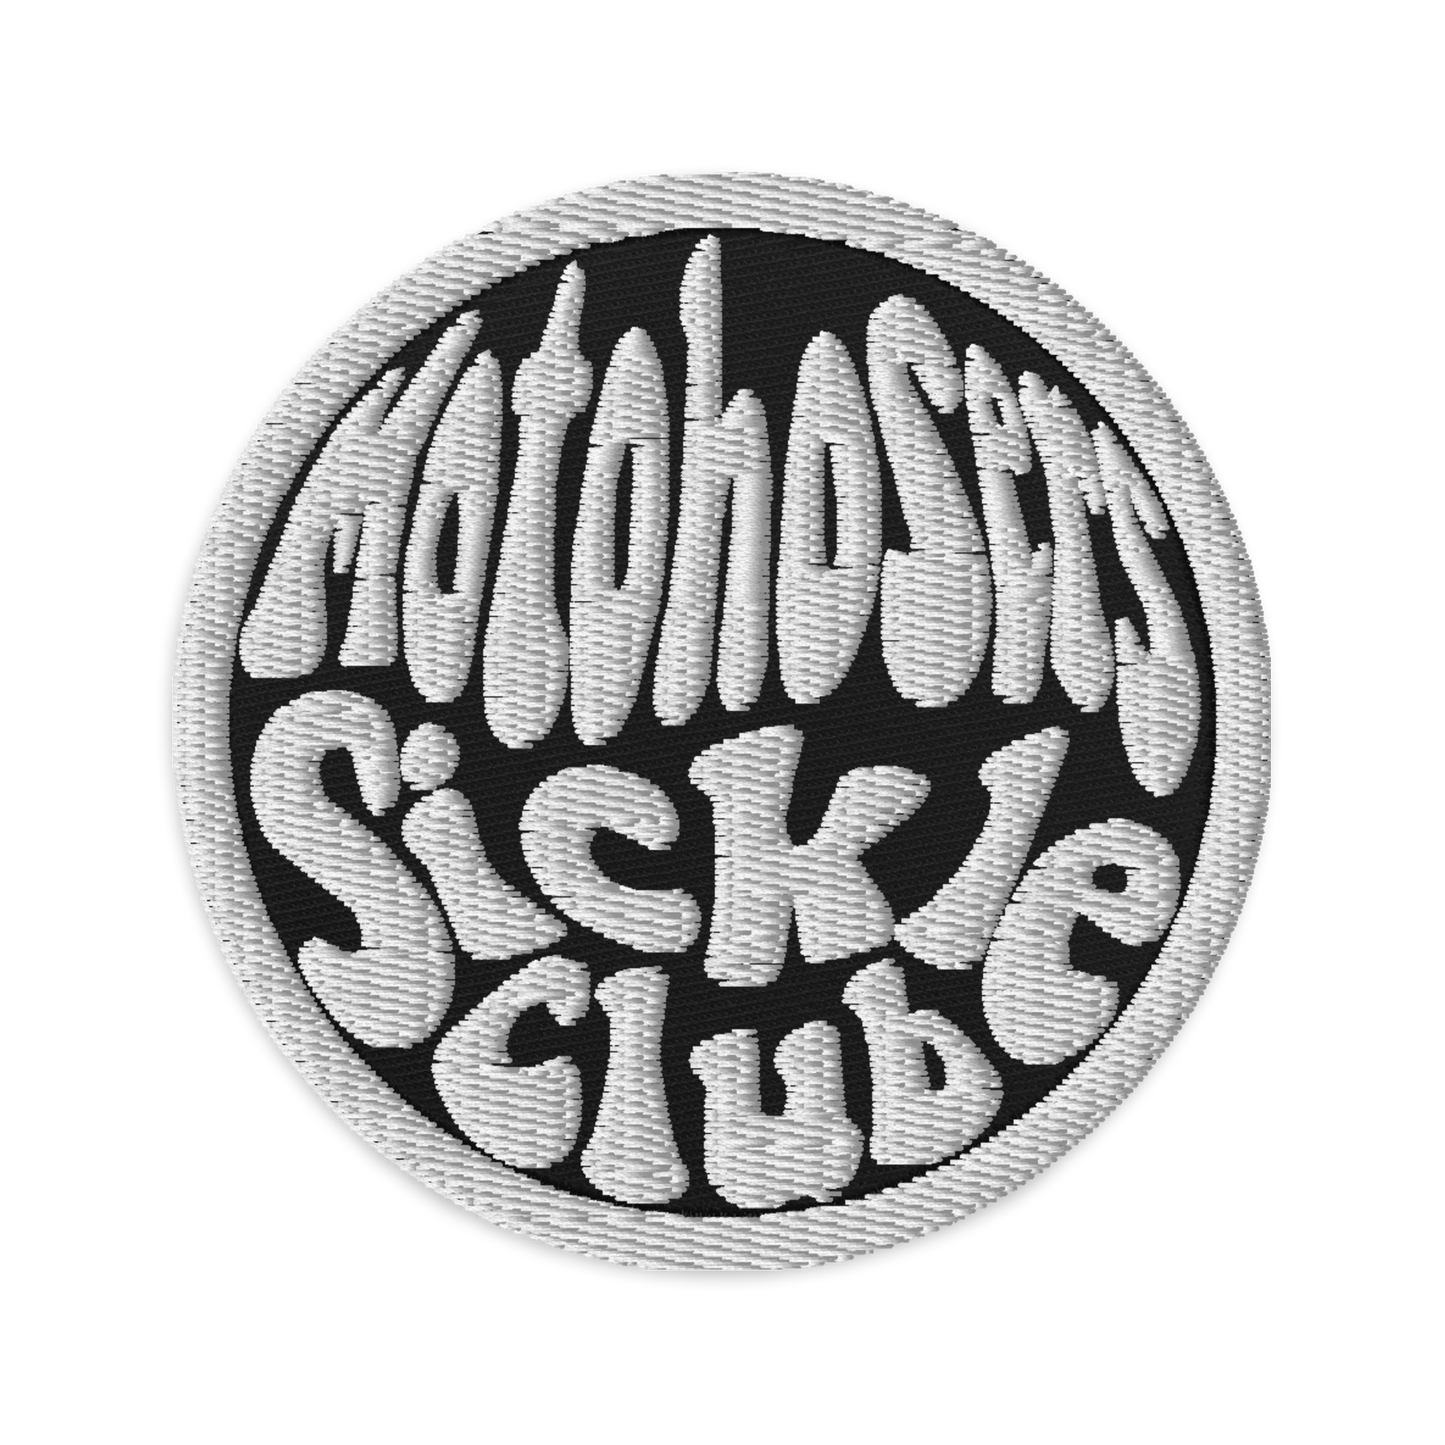 Sickle Club Patch